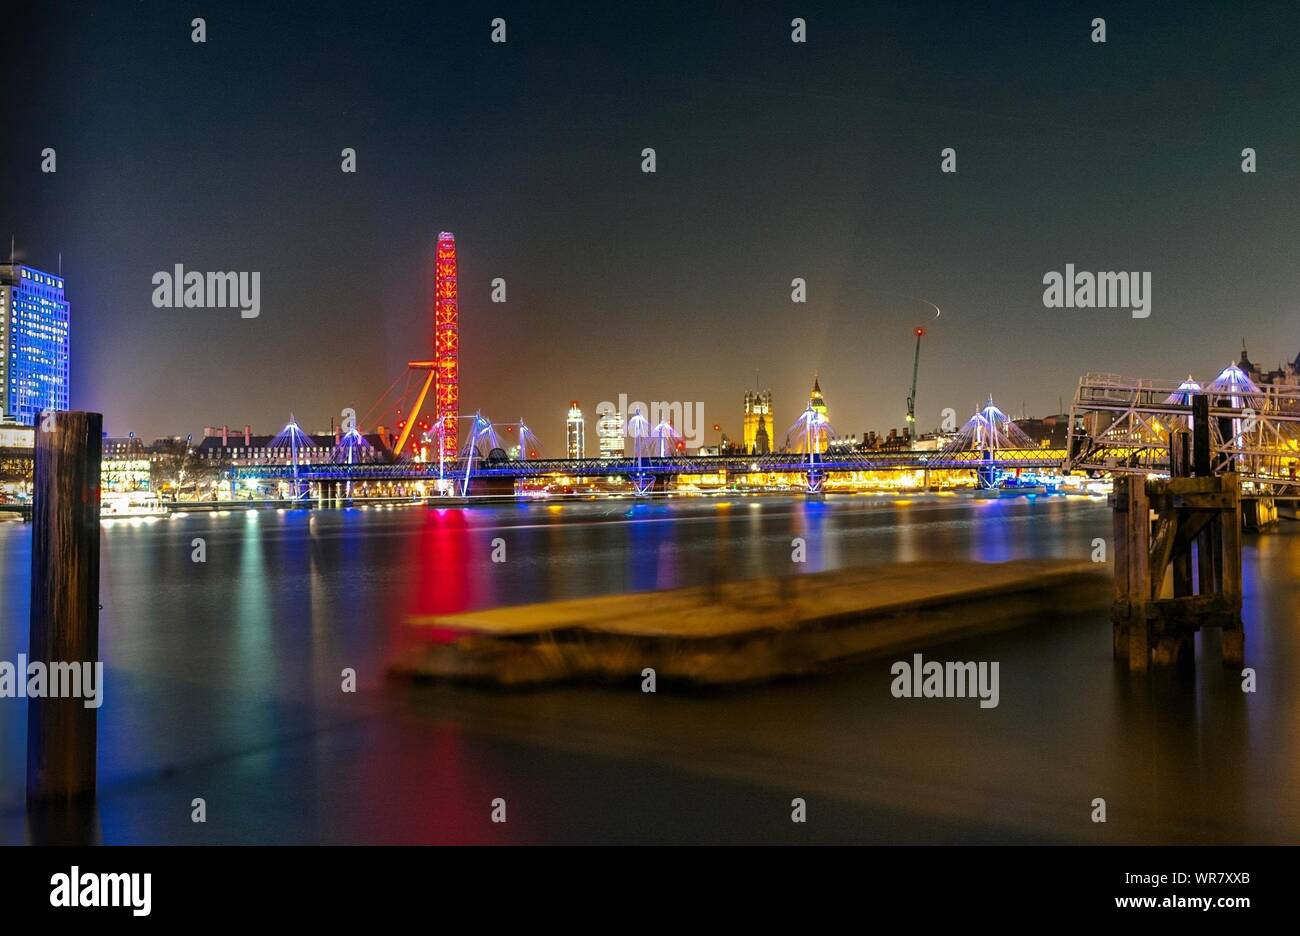 Illuminated Golden Jubilee Bridge Over Thames River At Night Stock Photo